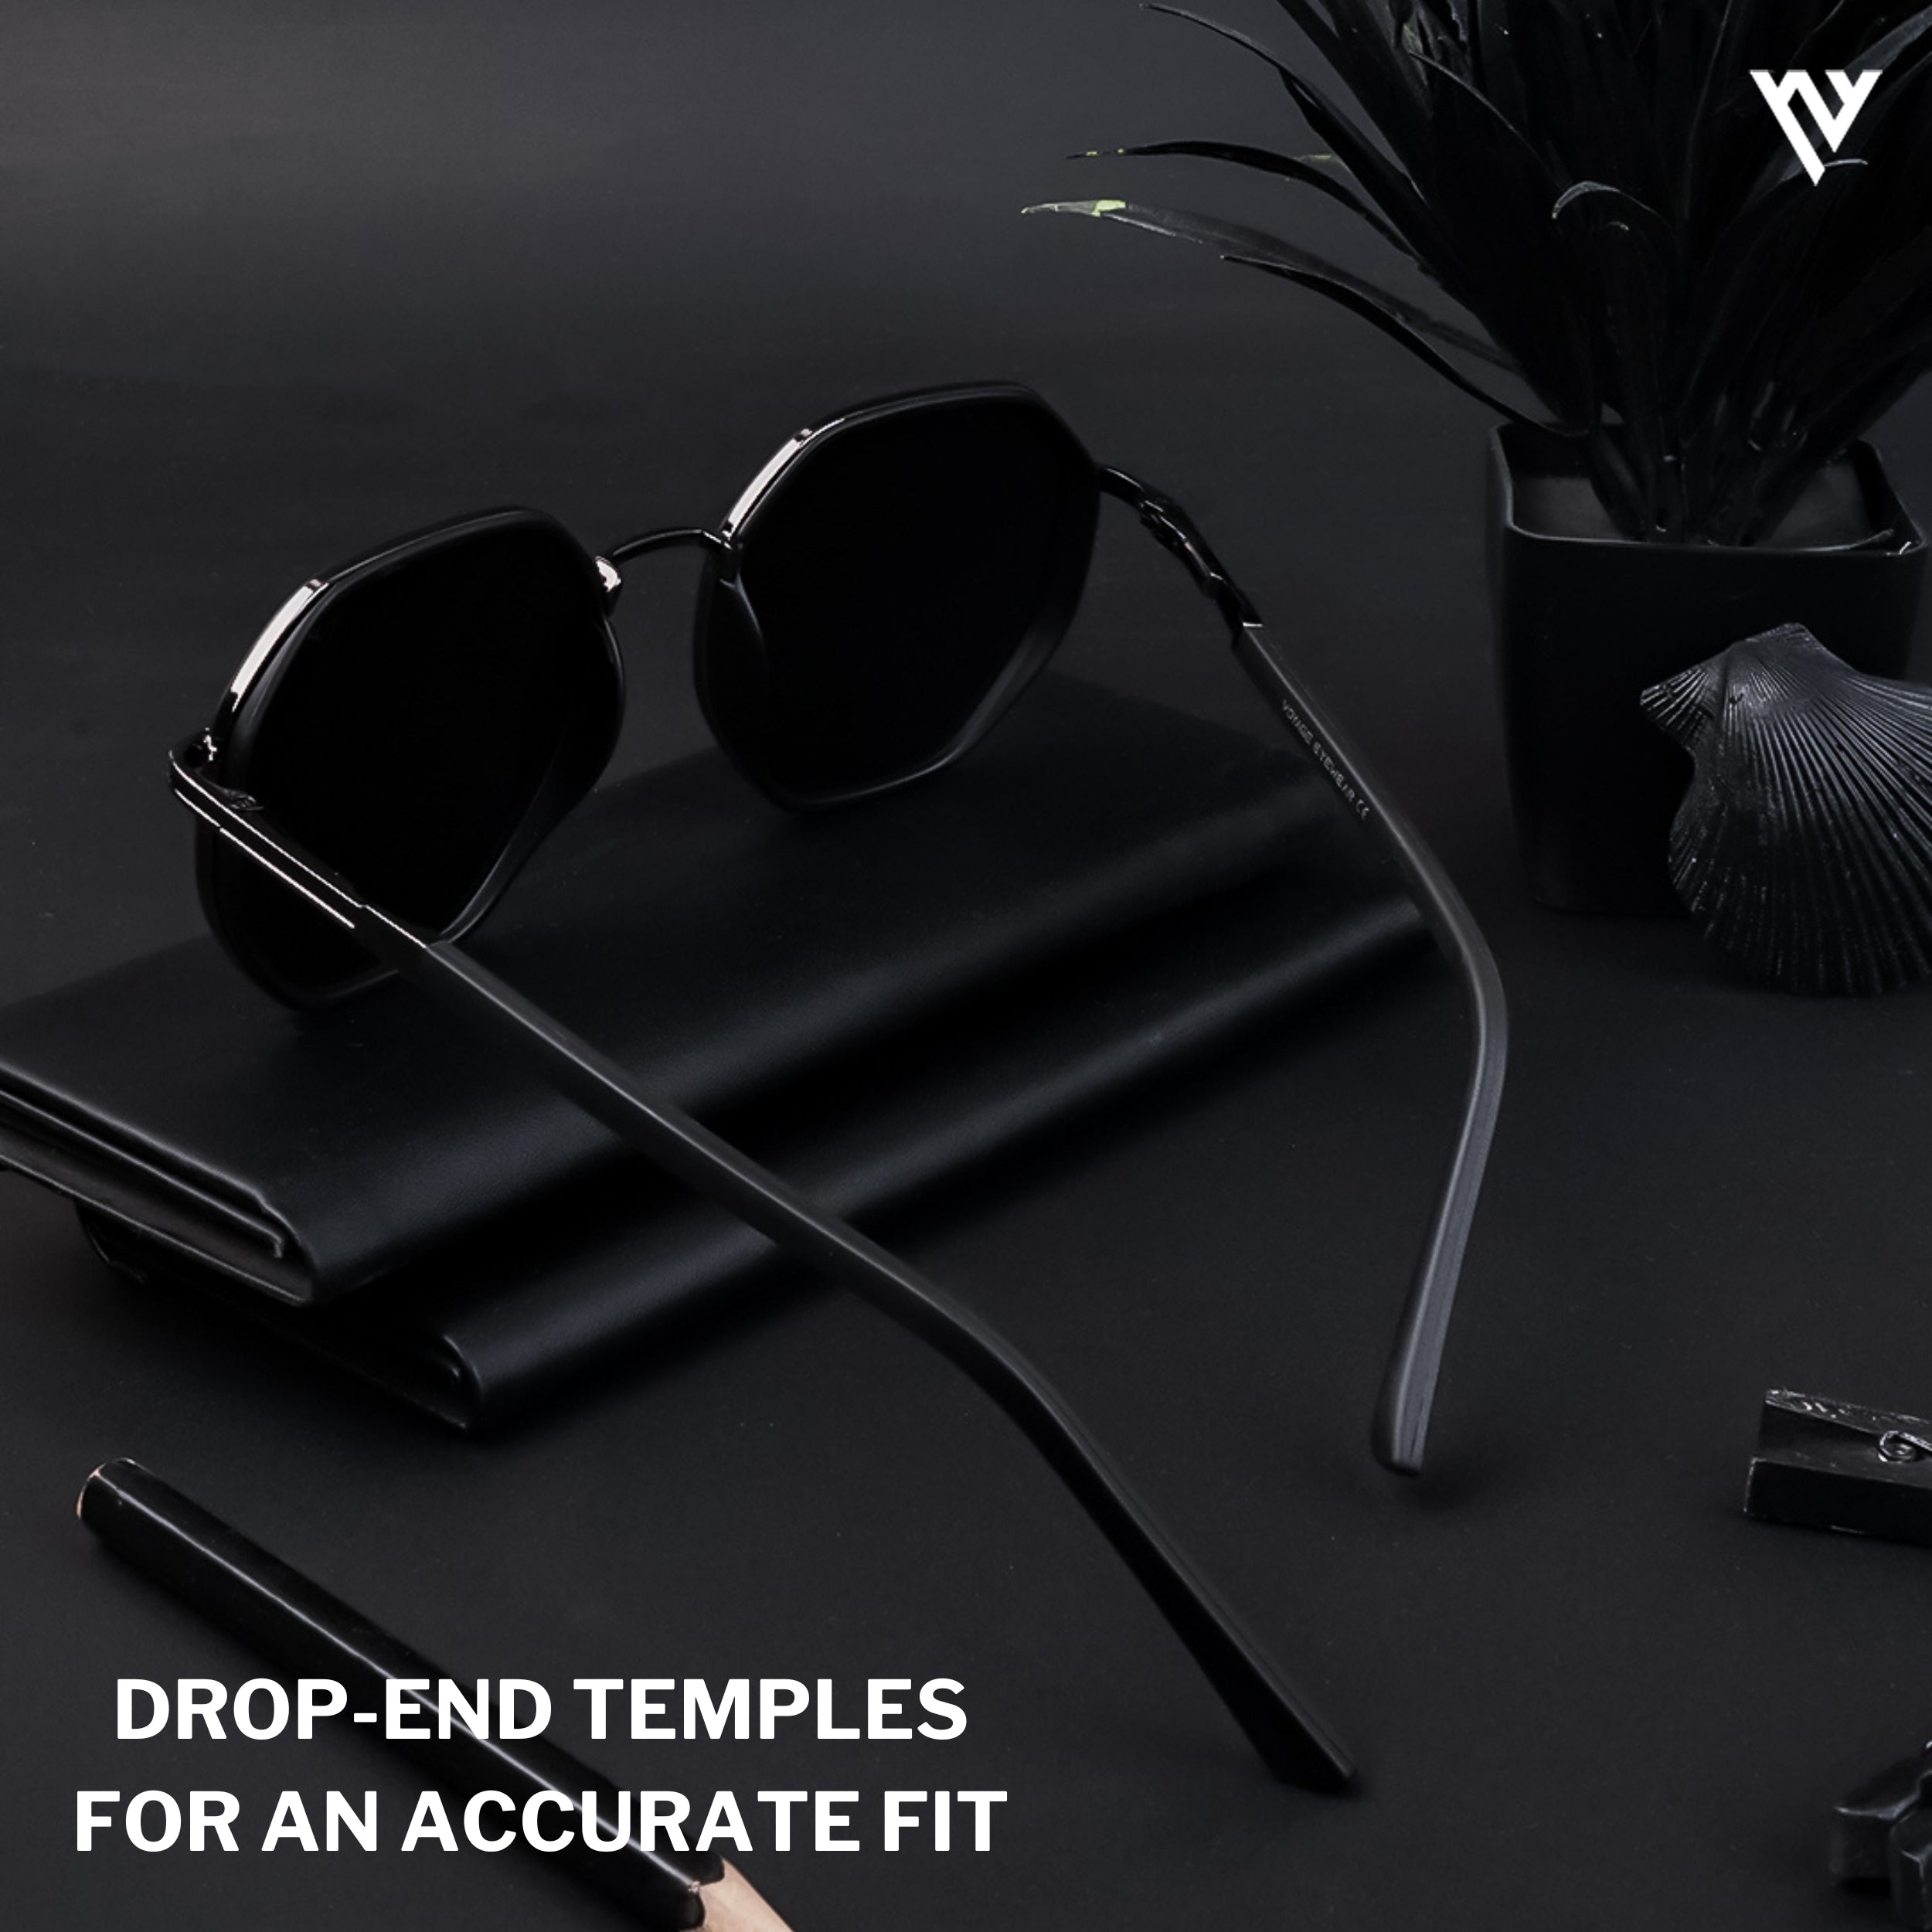 Voyage Exclusive Black Polarized Geometric Sunglasses for Men & Women - PMG4206